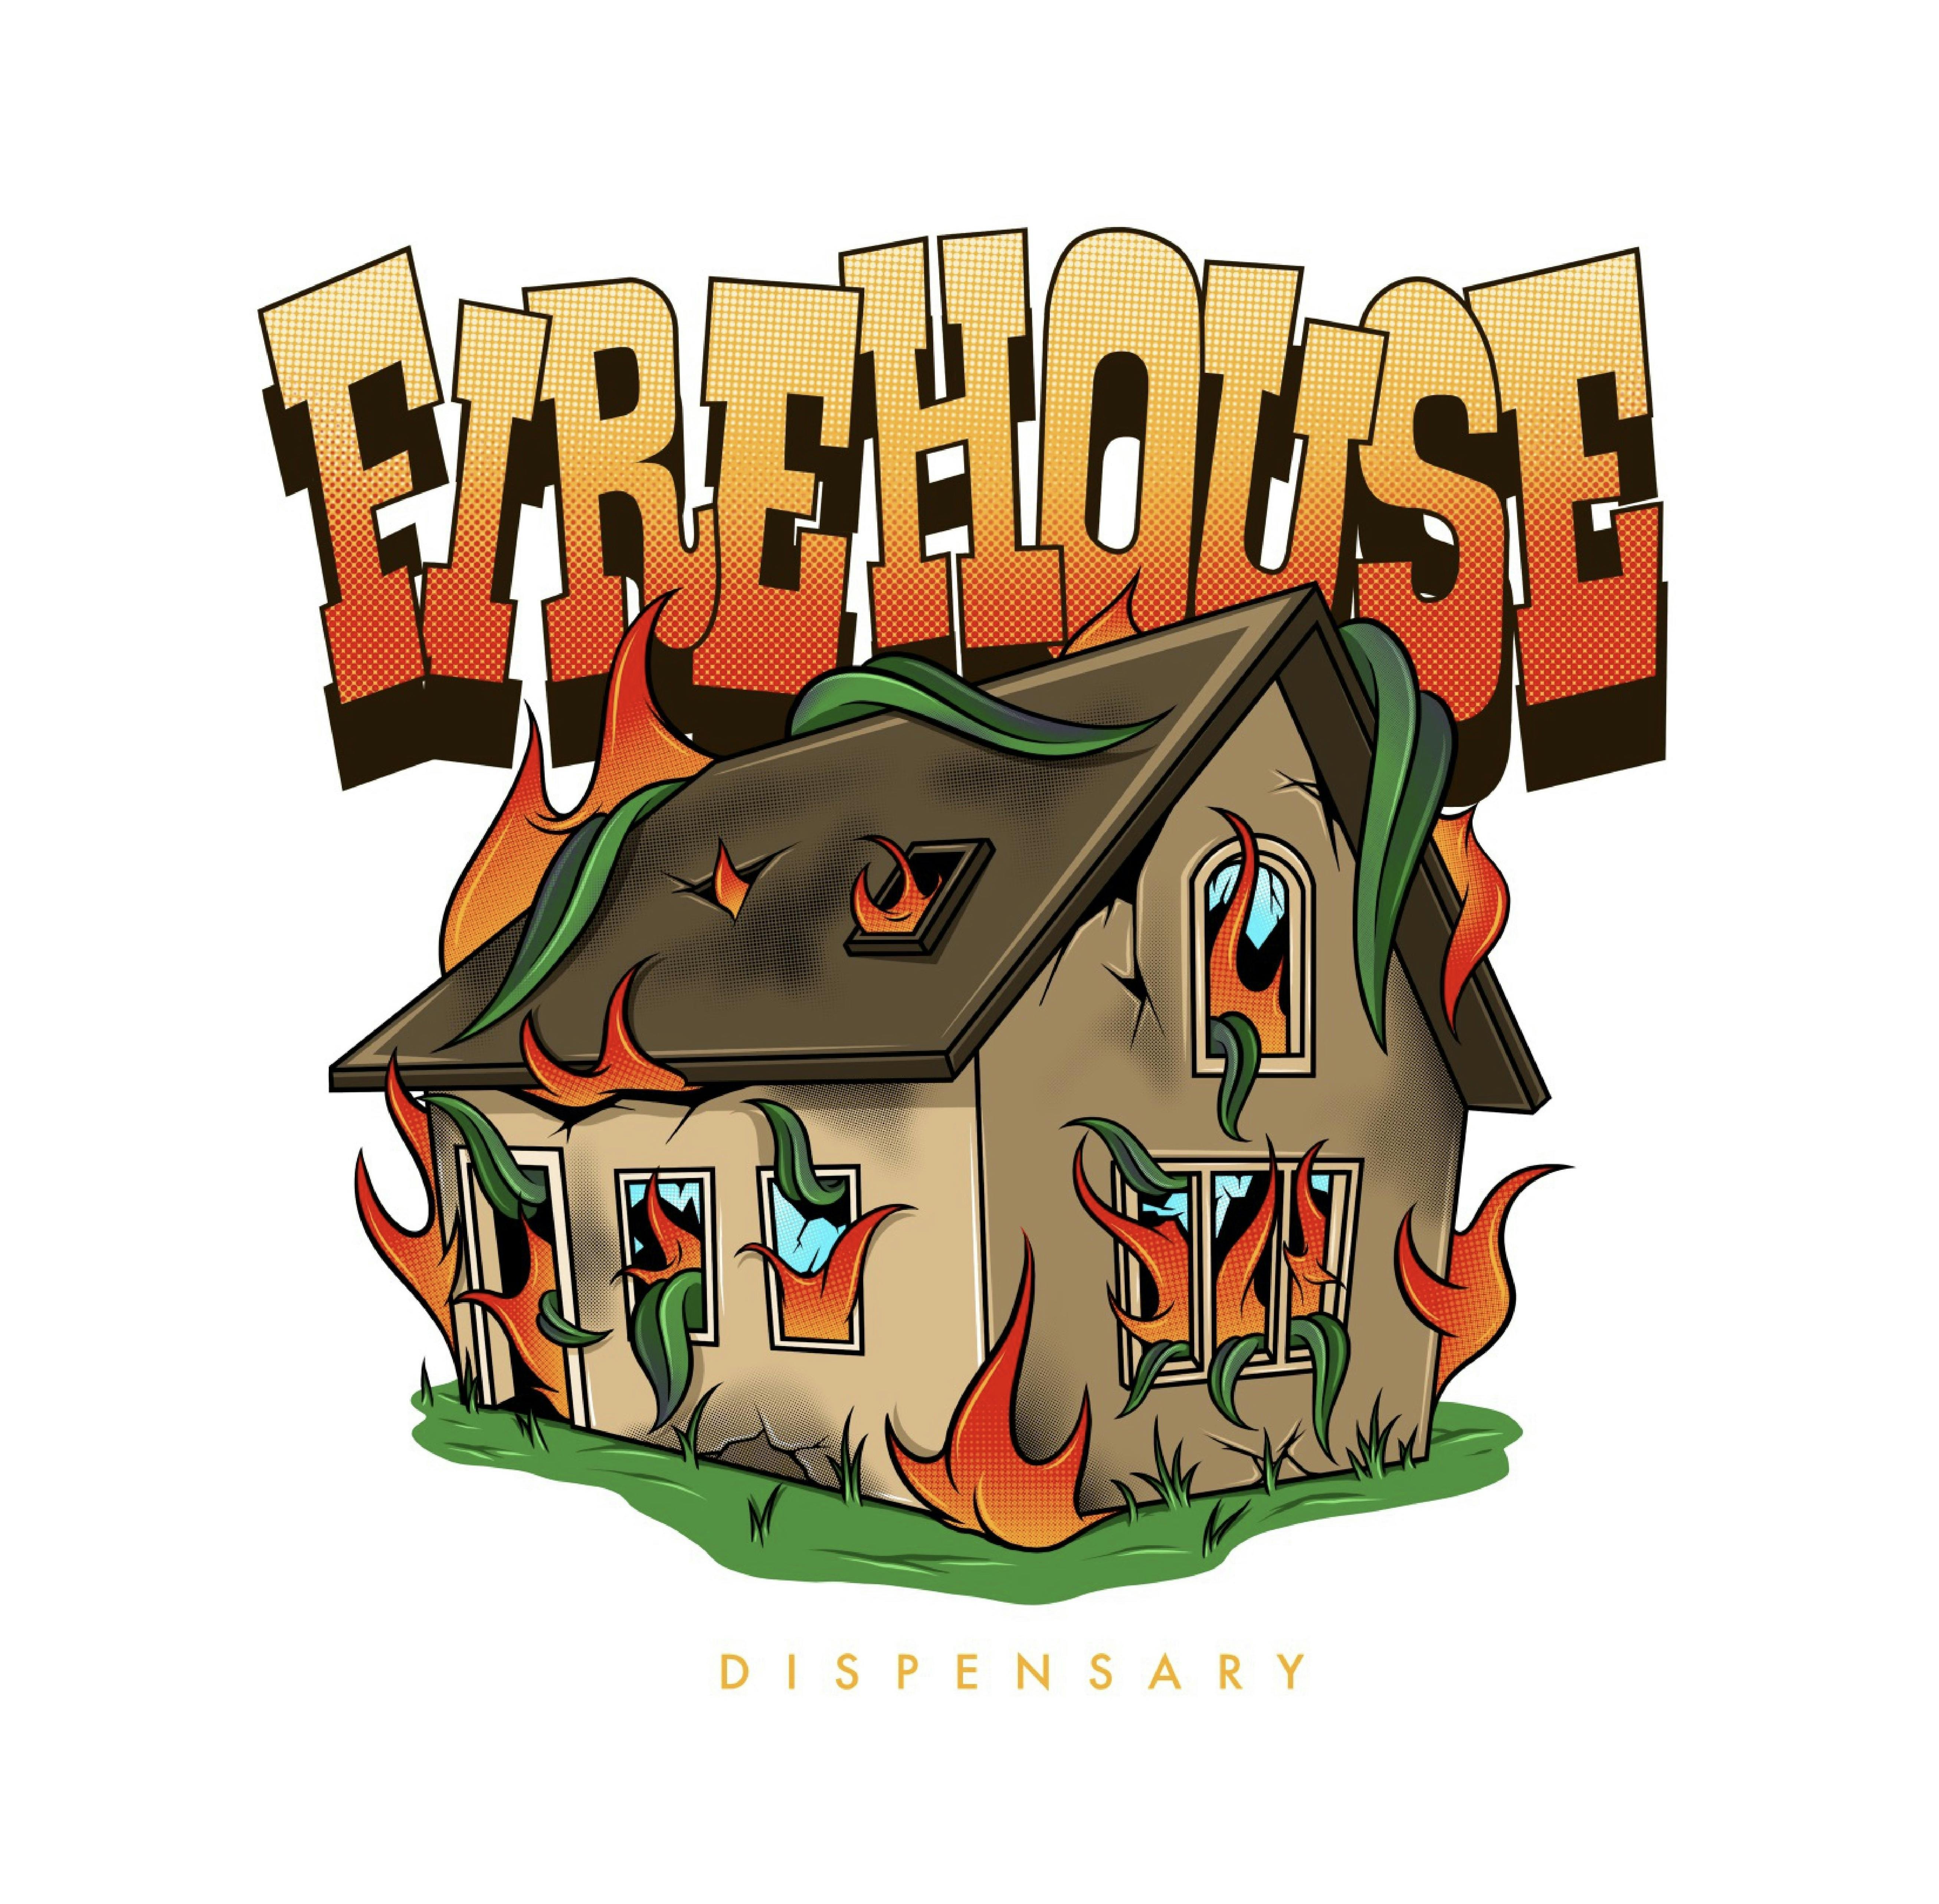 Firehouse Cannabis Dispensary logo